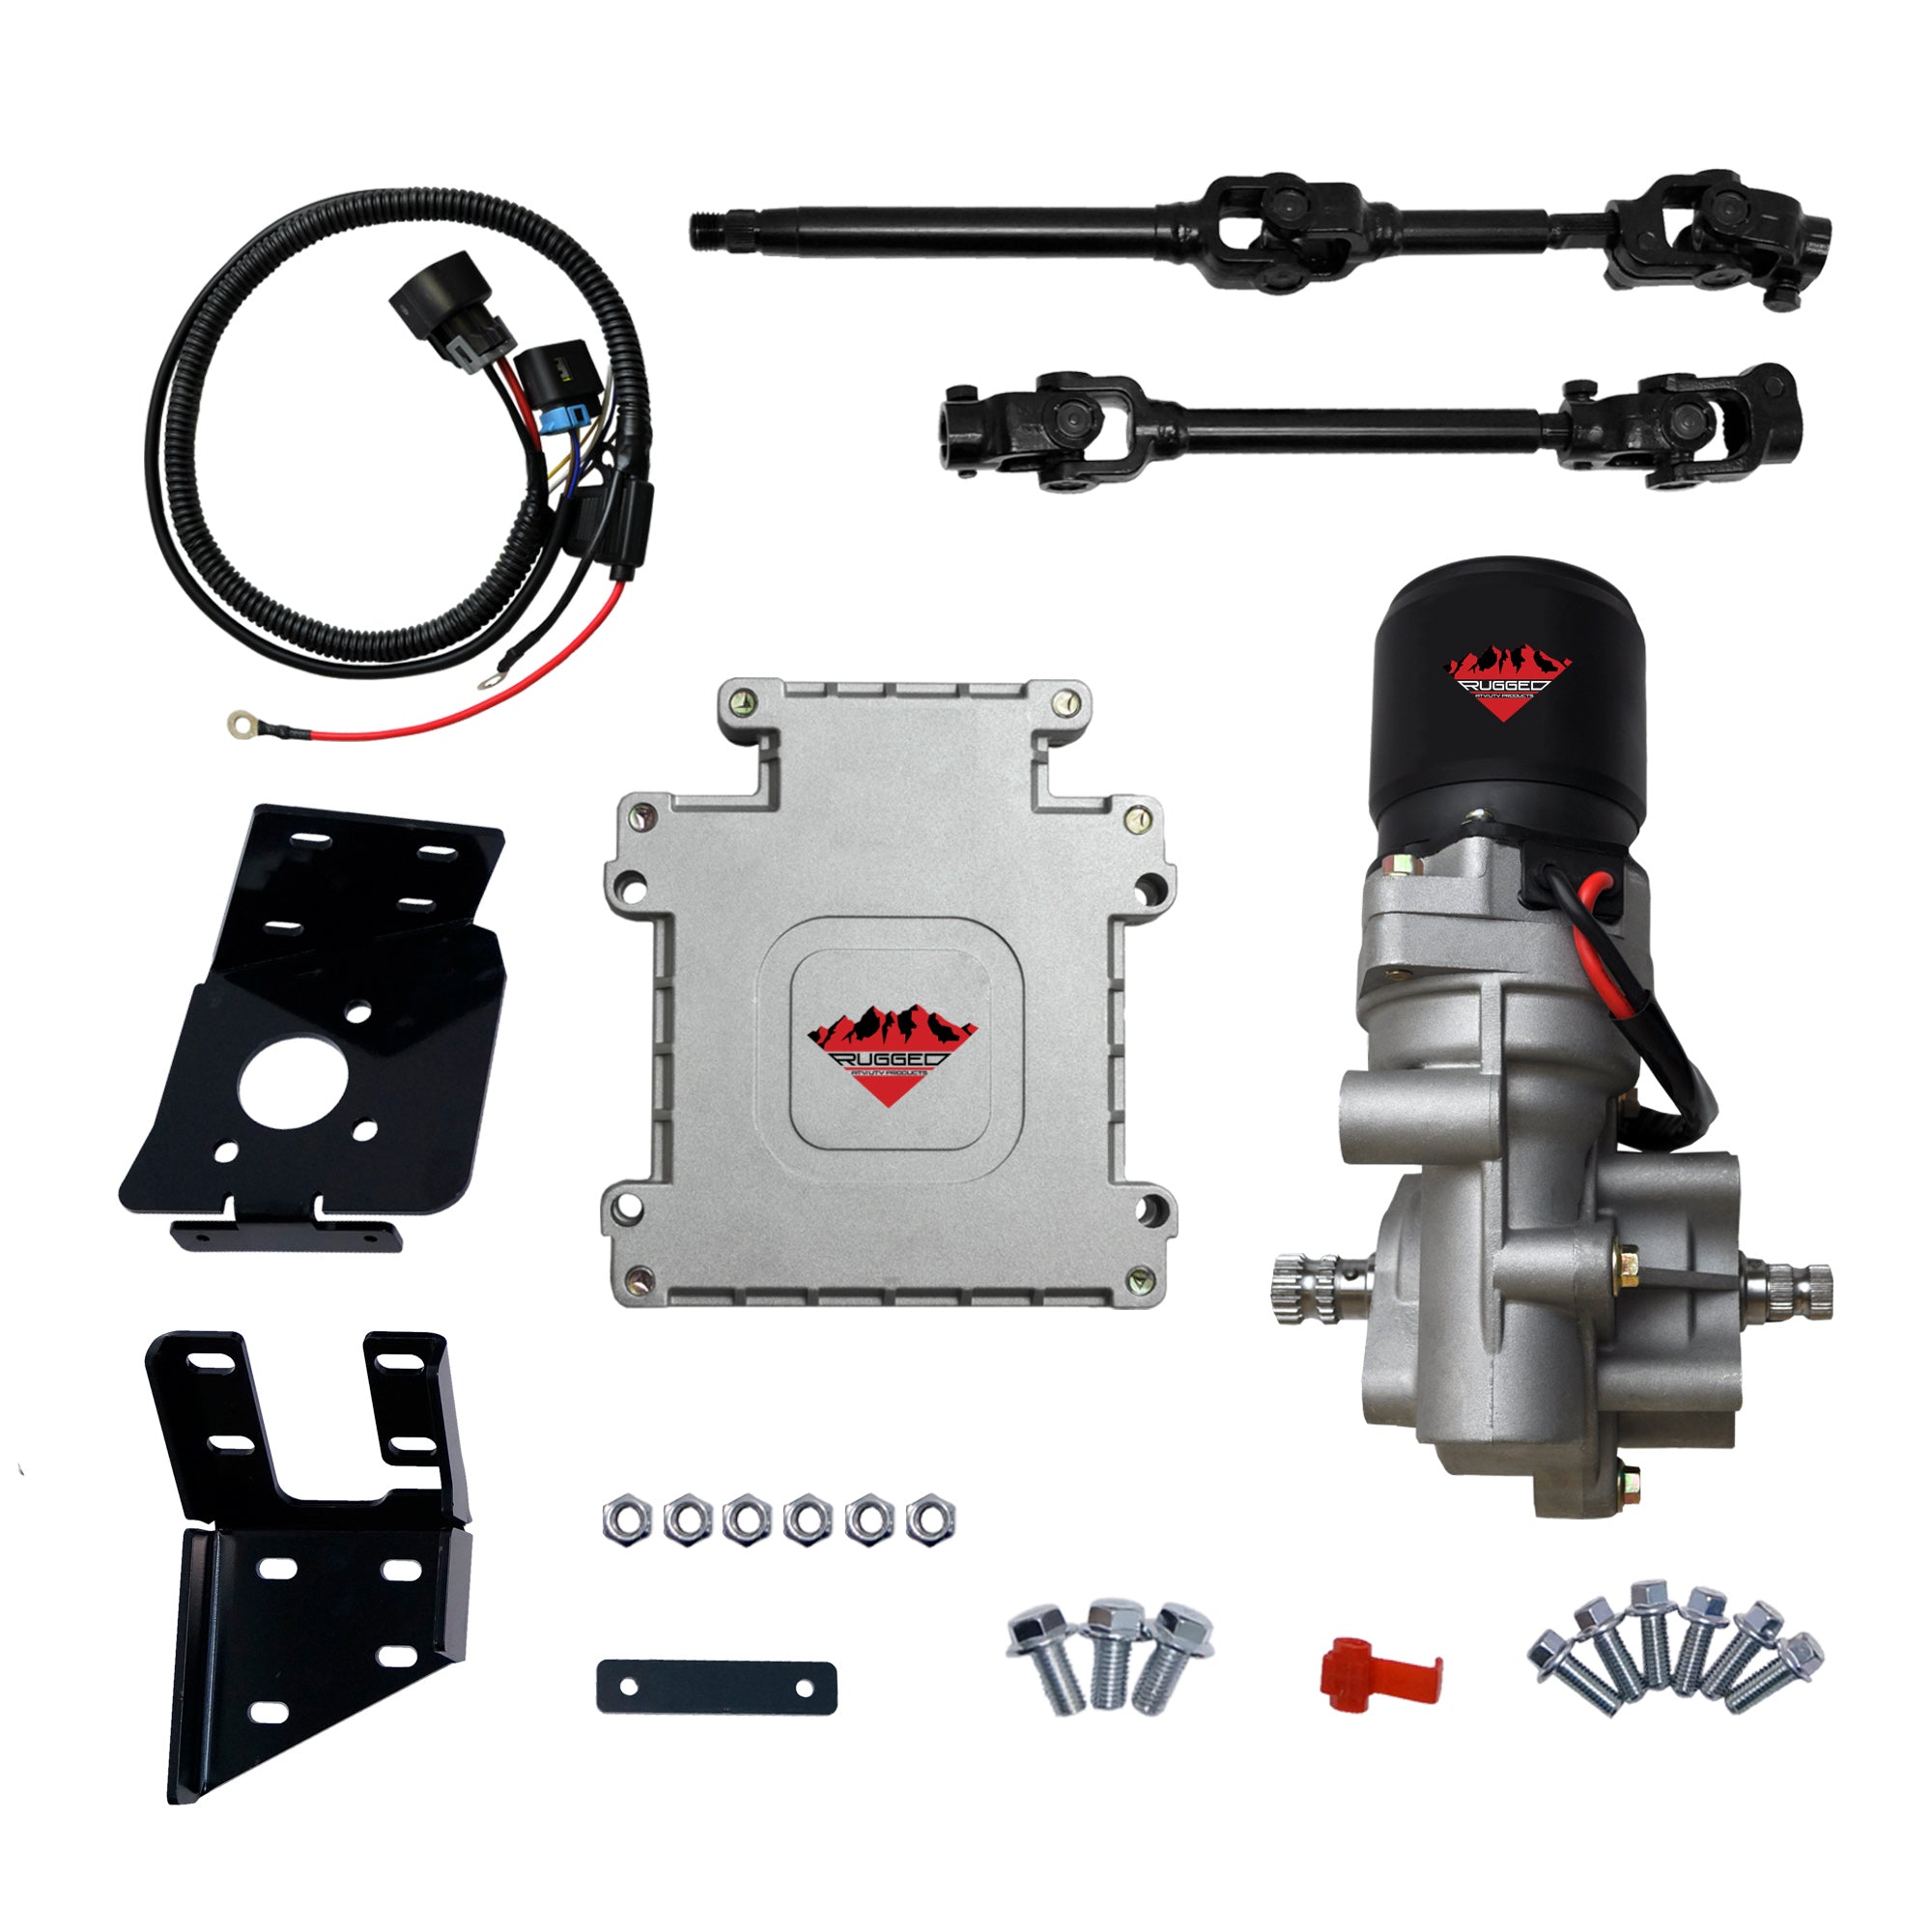 RZR 1000 Power Steering Kit